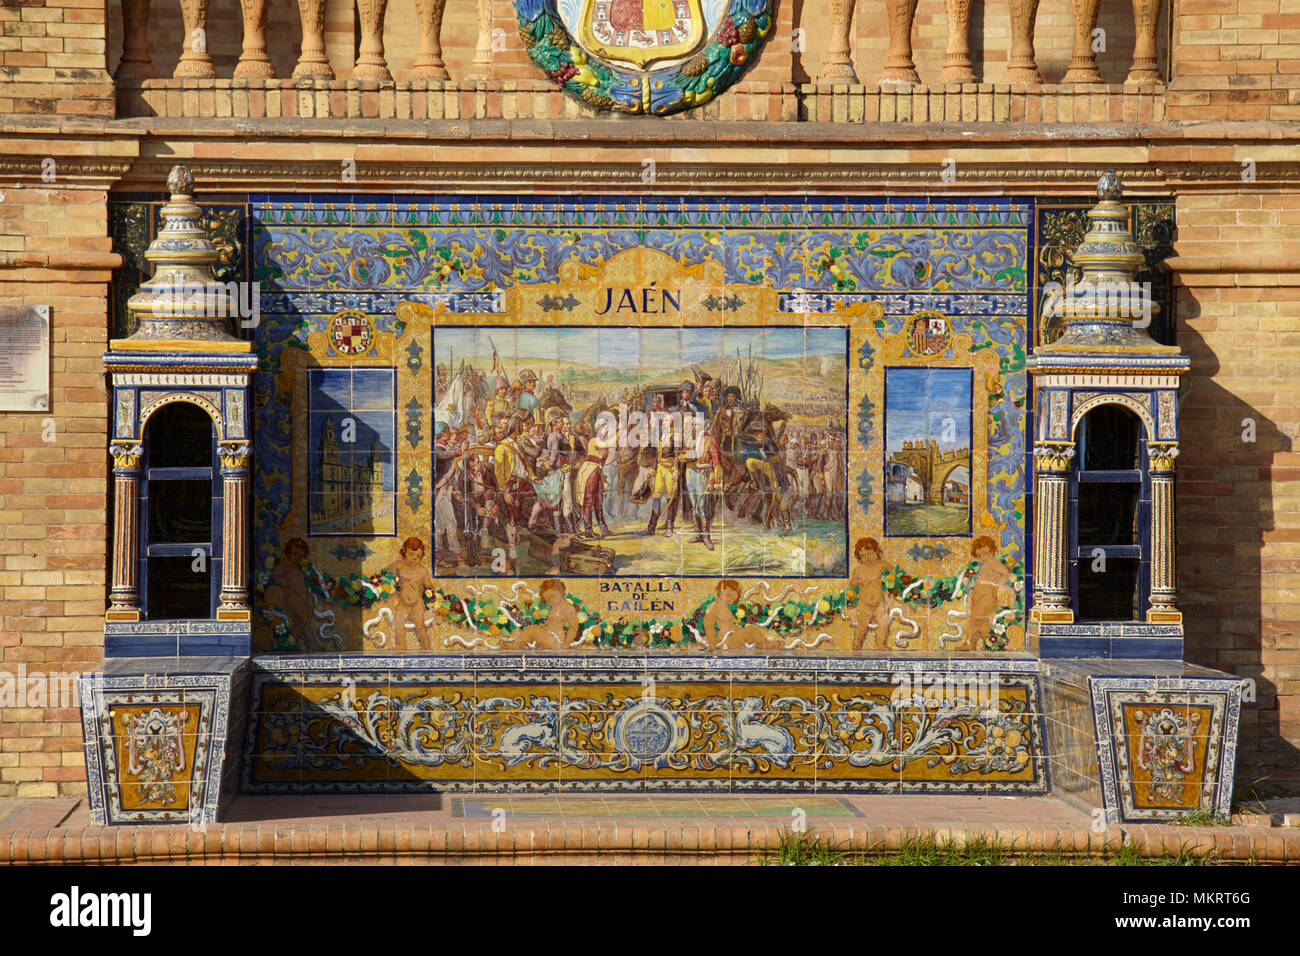 The tiled Provincial Alcoves in Plaza de España (Spain Square) in Seville, Spain Stock Photo